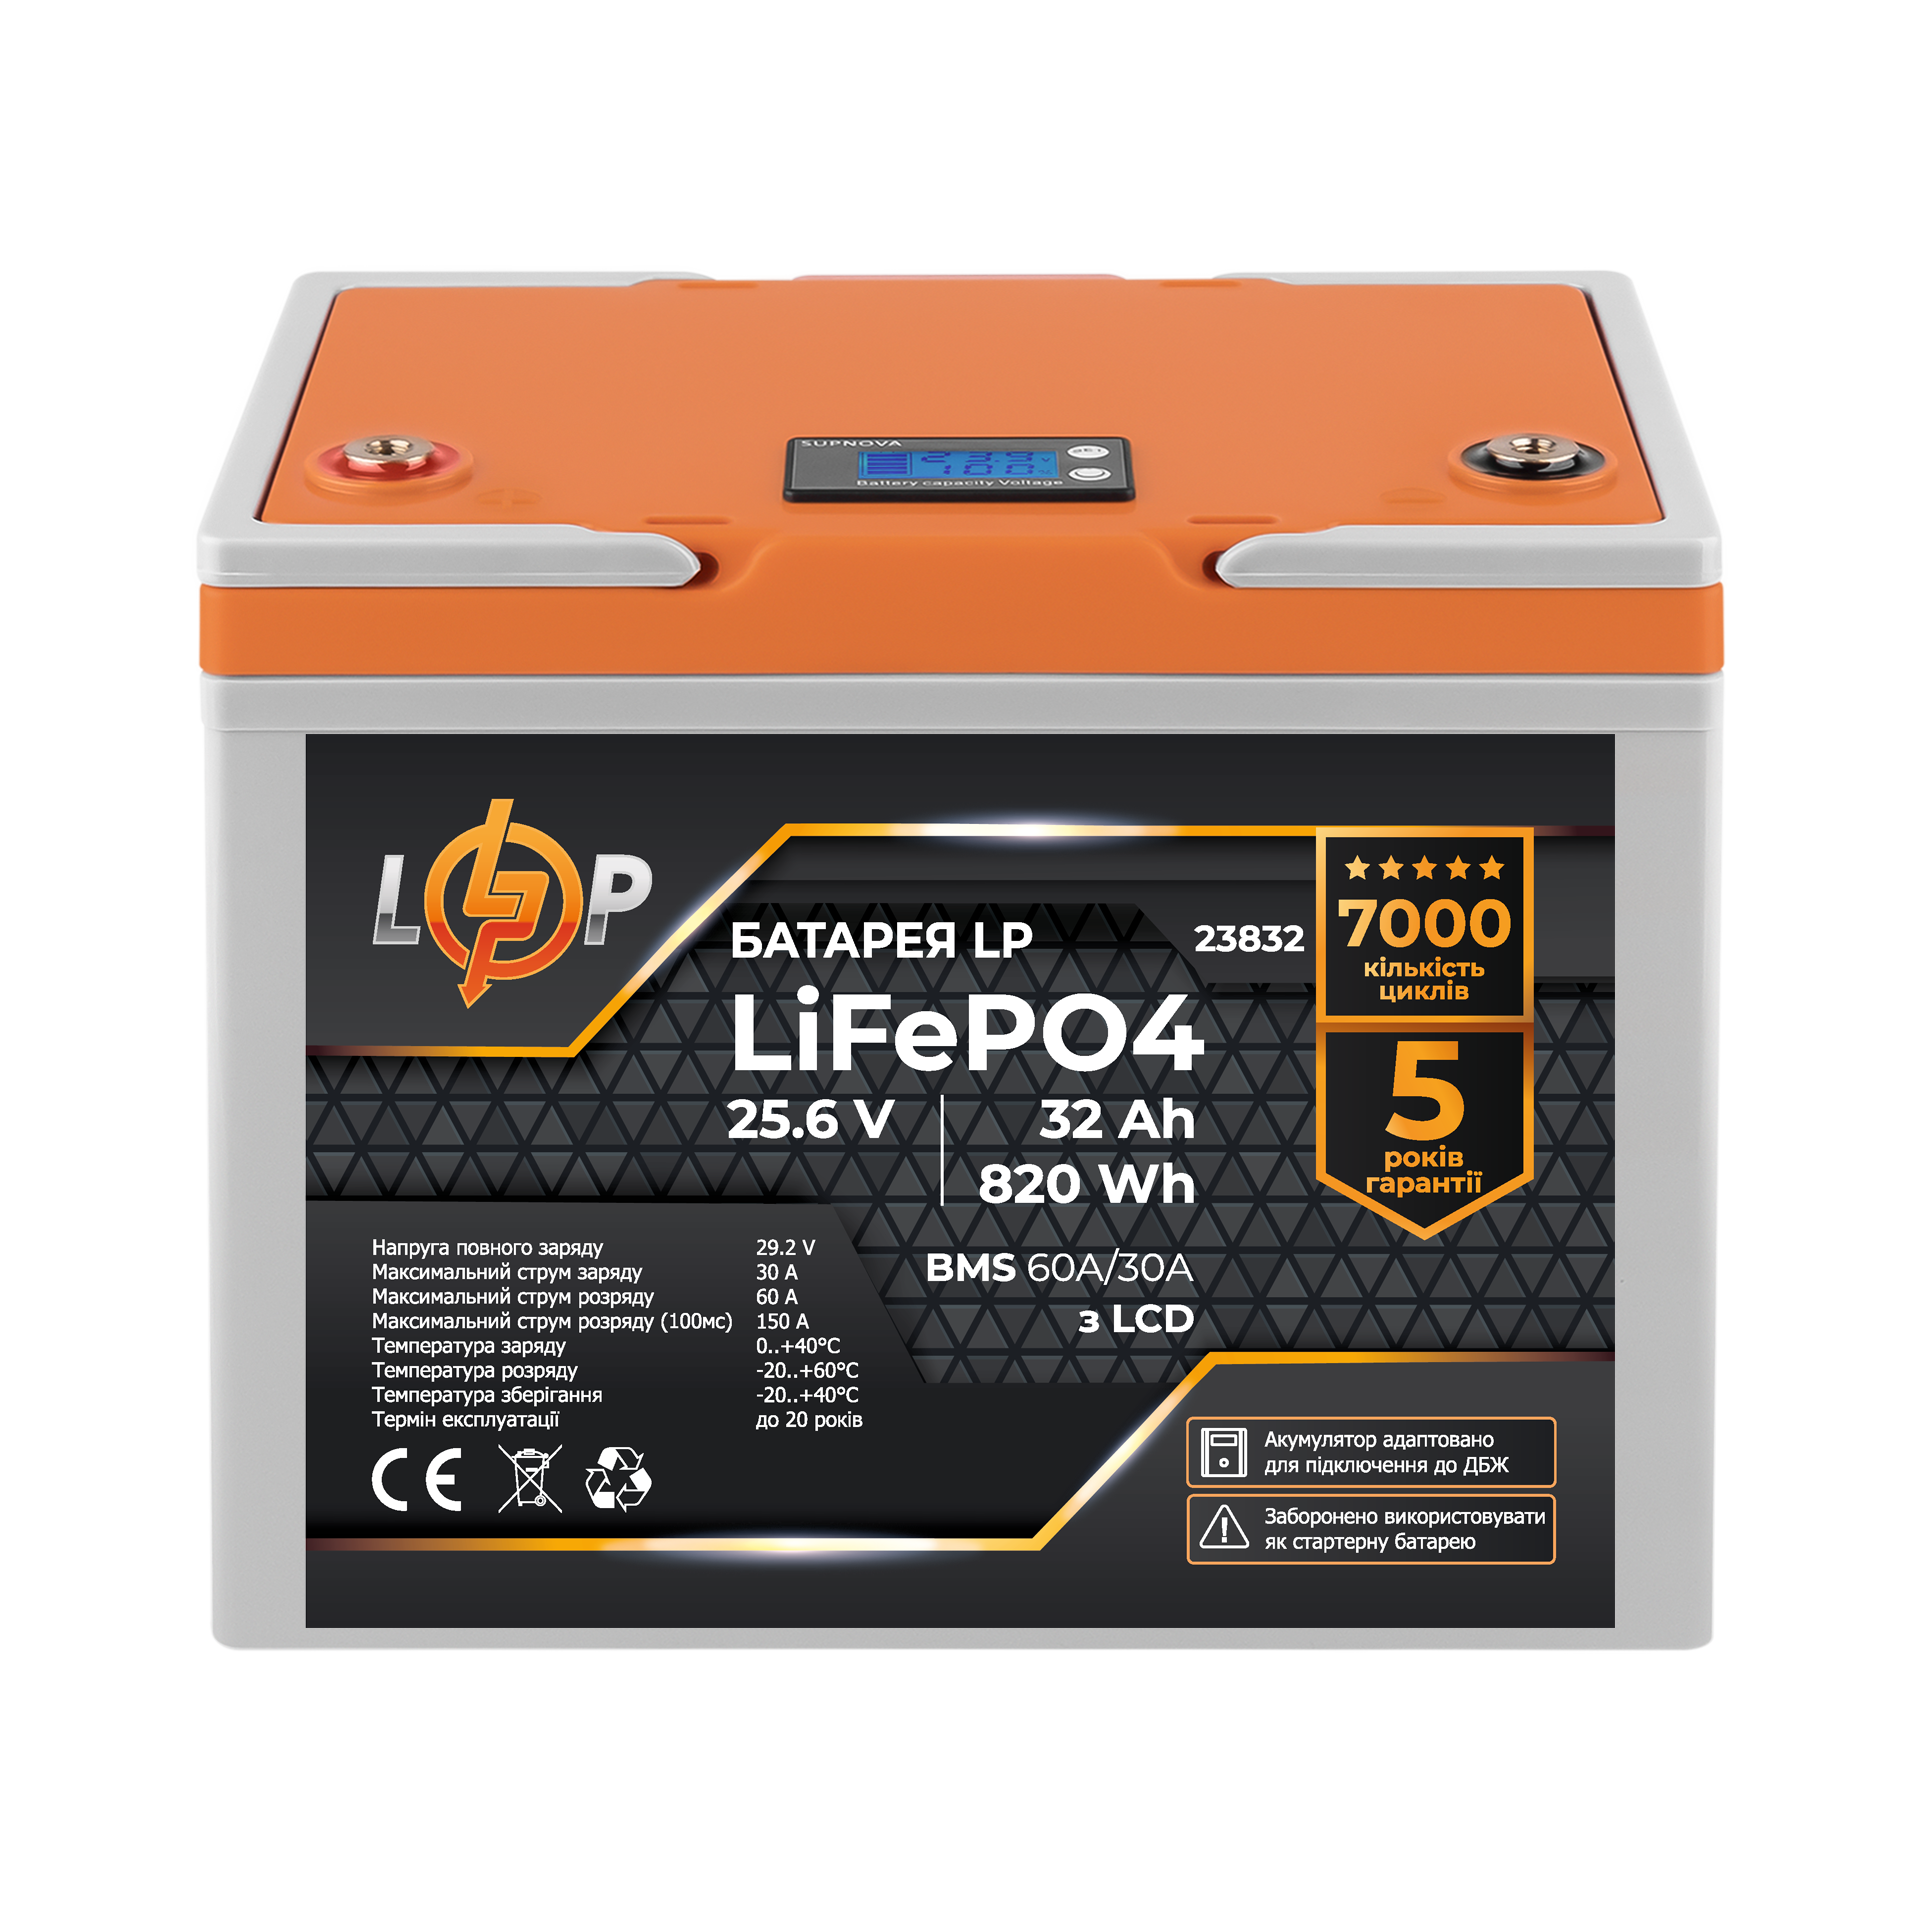 Аккумулятор LP LiFePO4 25,6V - 32 Ah (820Wh) (BMS 60А/30A) пластик LCD для ИБП (23832) в интернет-магазине, главное фото